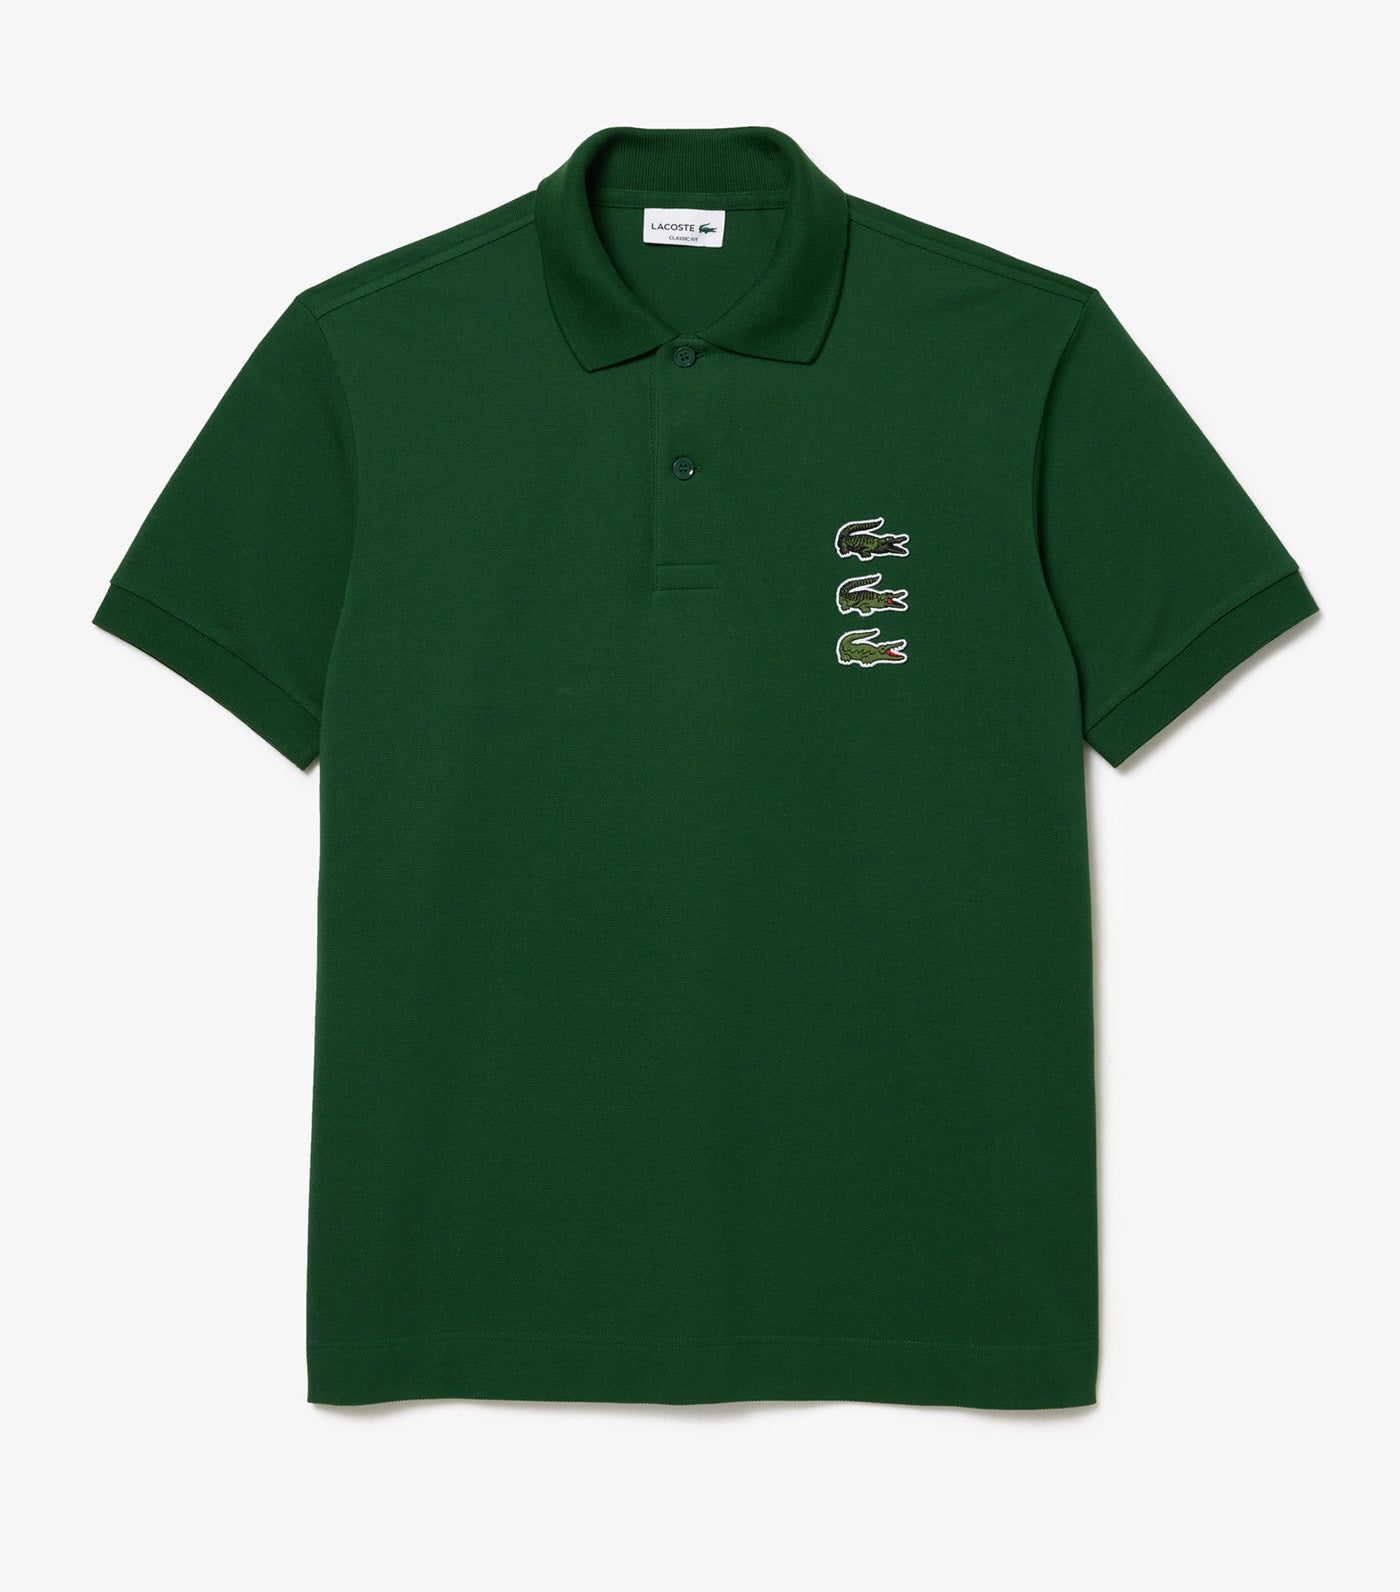 NEW Lacoste Sport Short Sleeve Multi Croc Logo Mens T Shirt